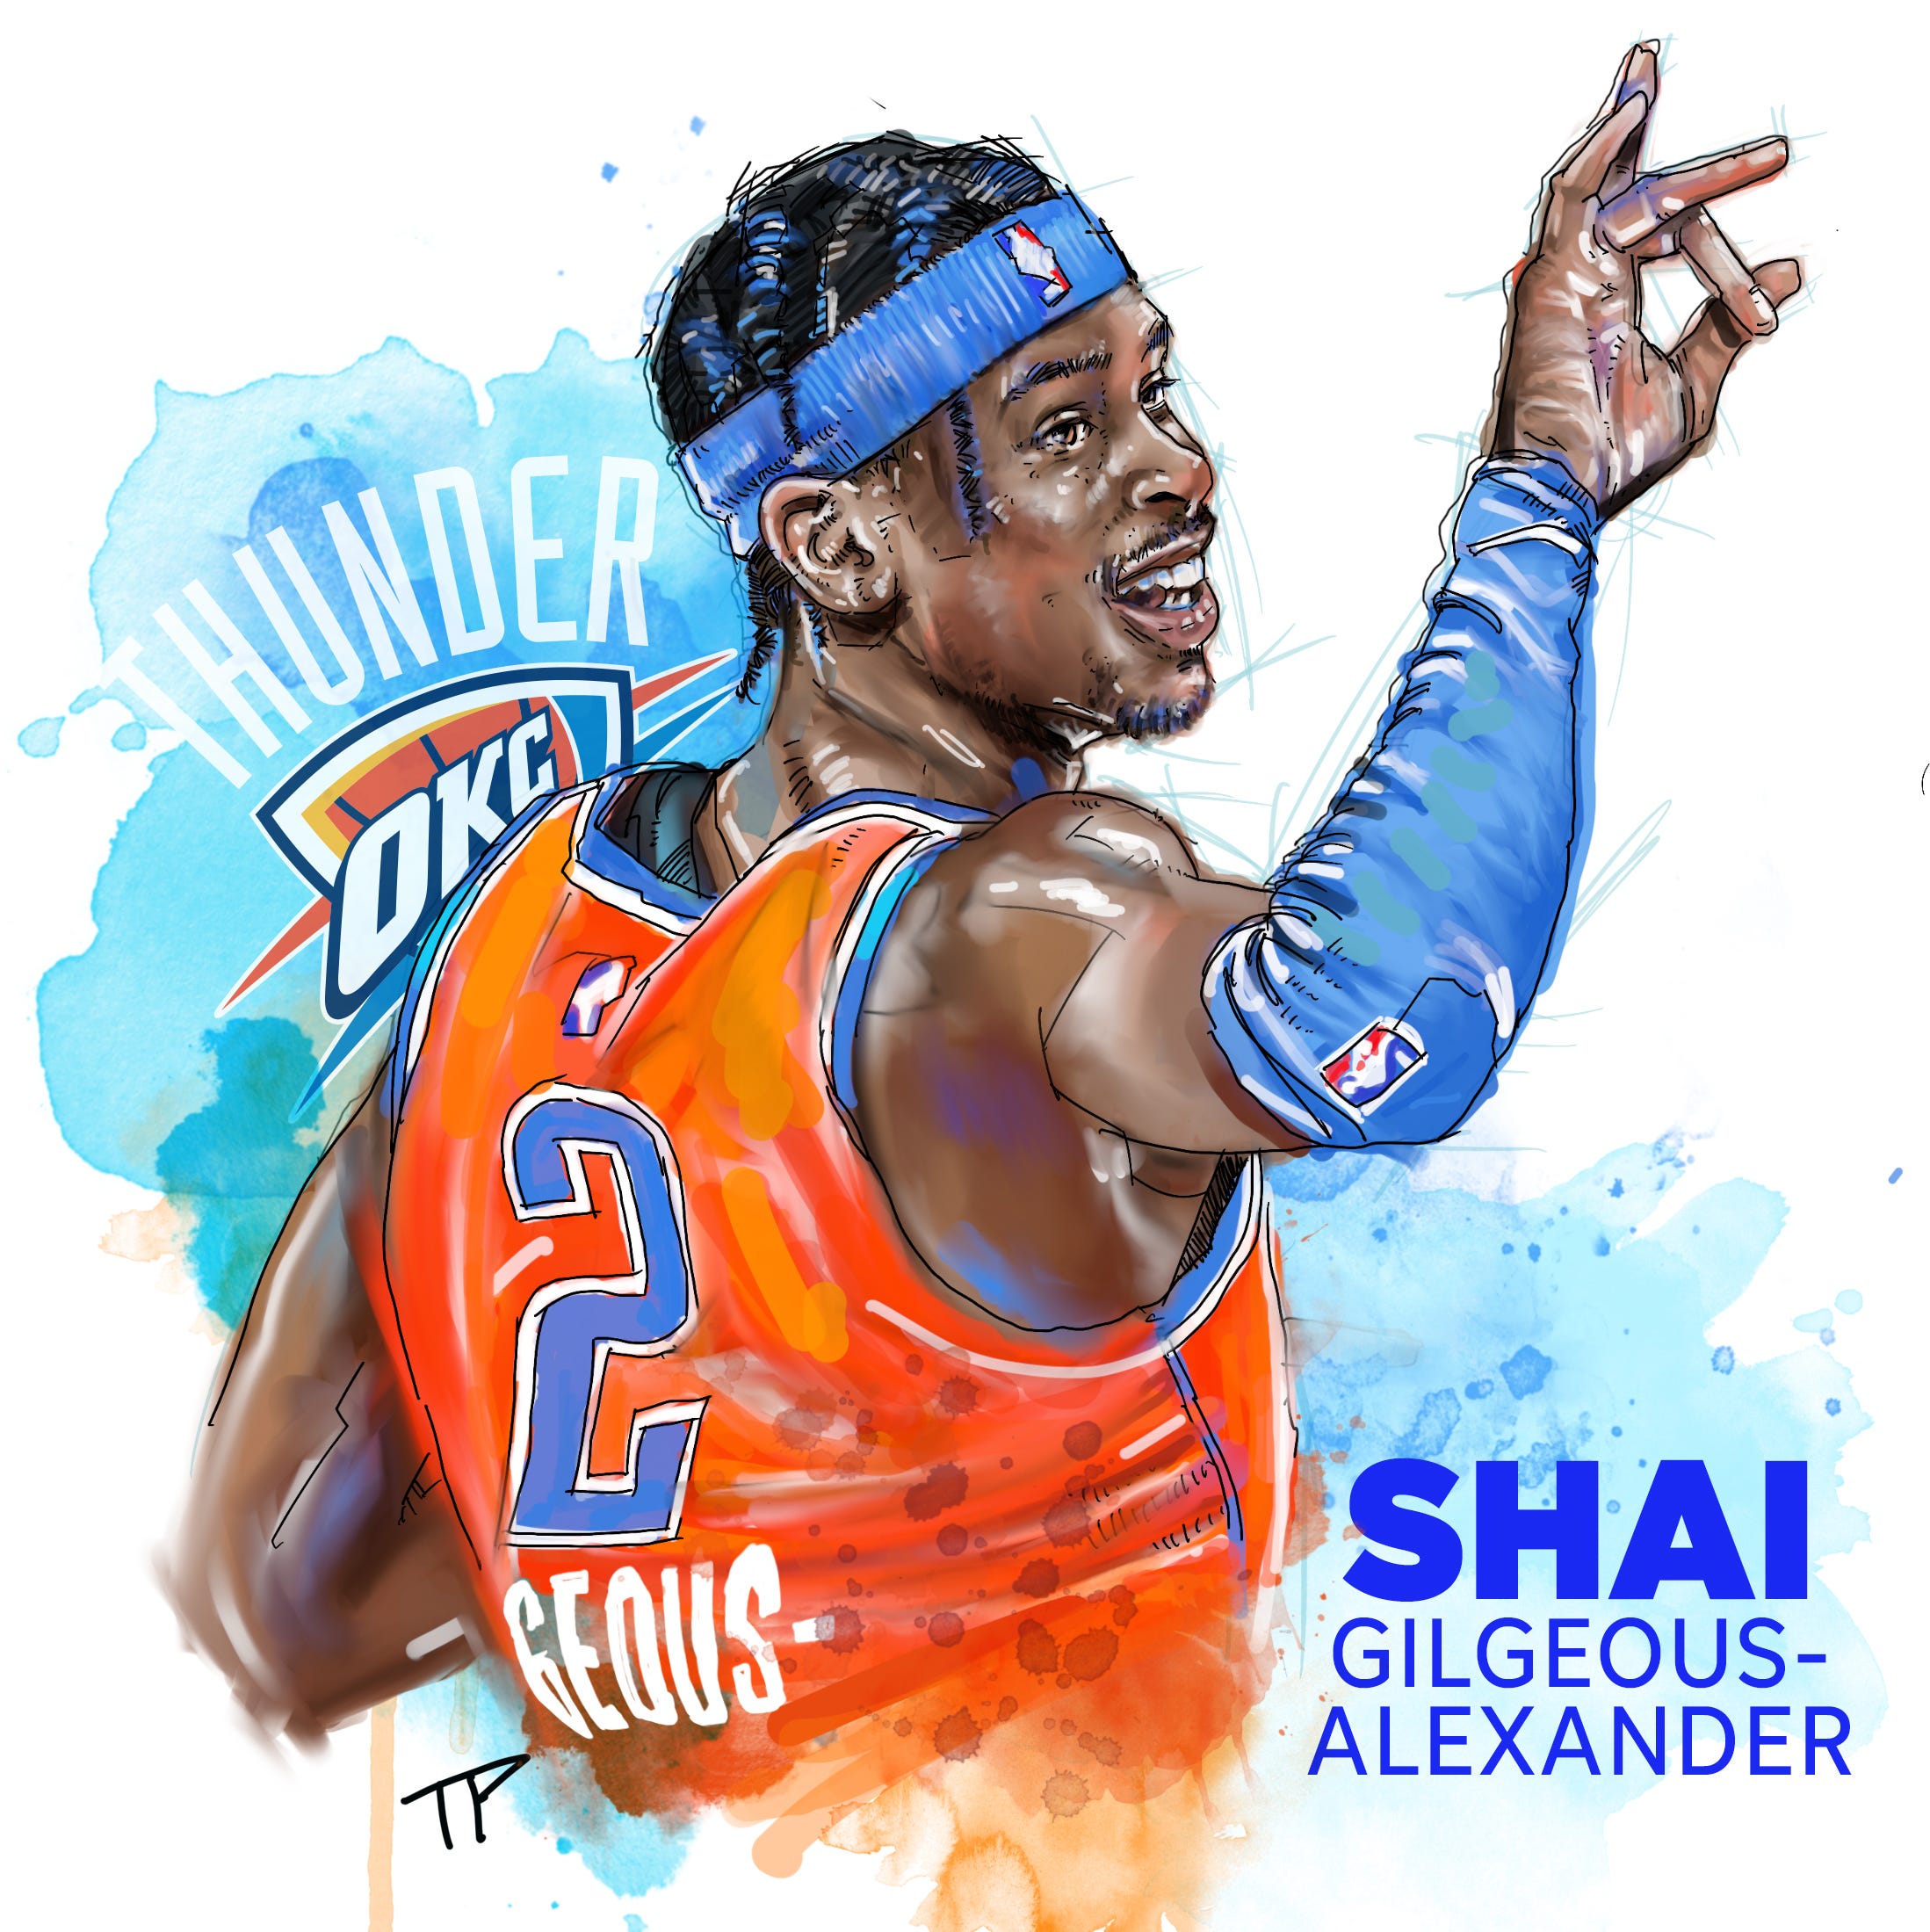 Shai Gilgeousalexander Thunder Design  Thunder design Nba pictures  Basketball pictures